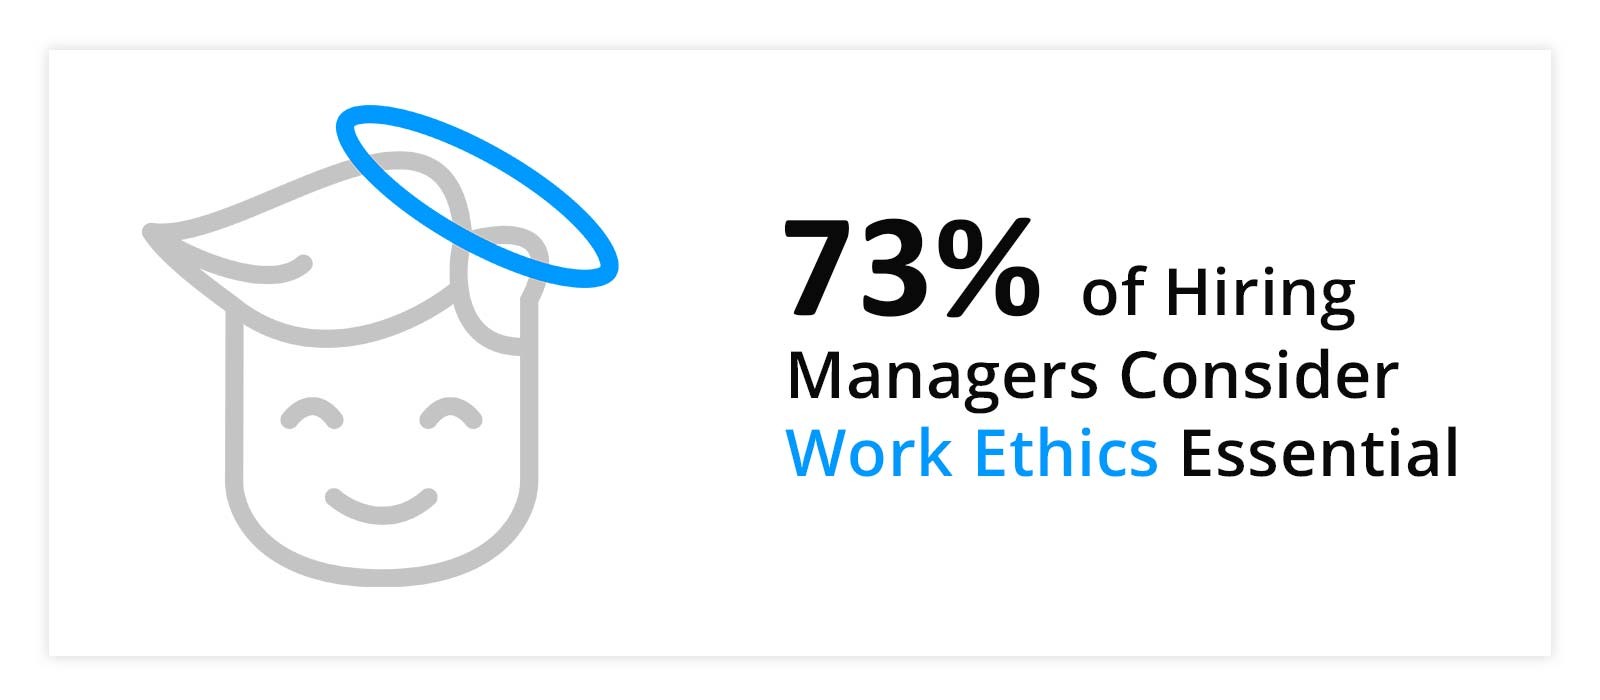 work ethics statistic